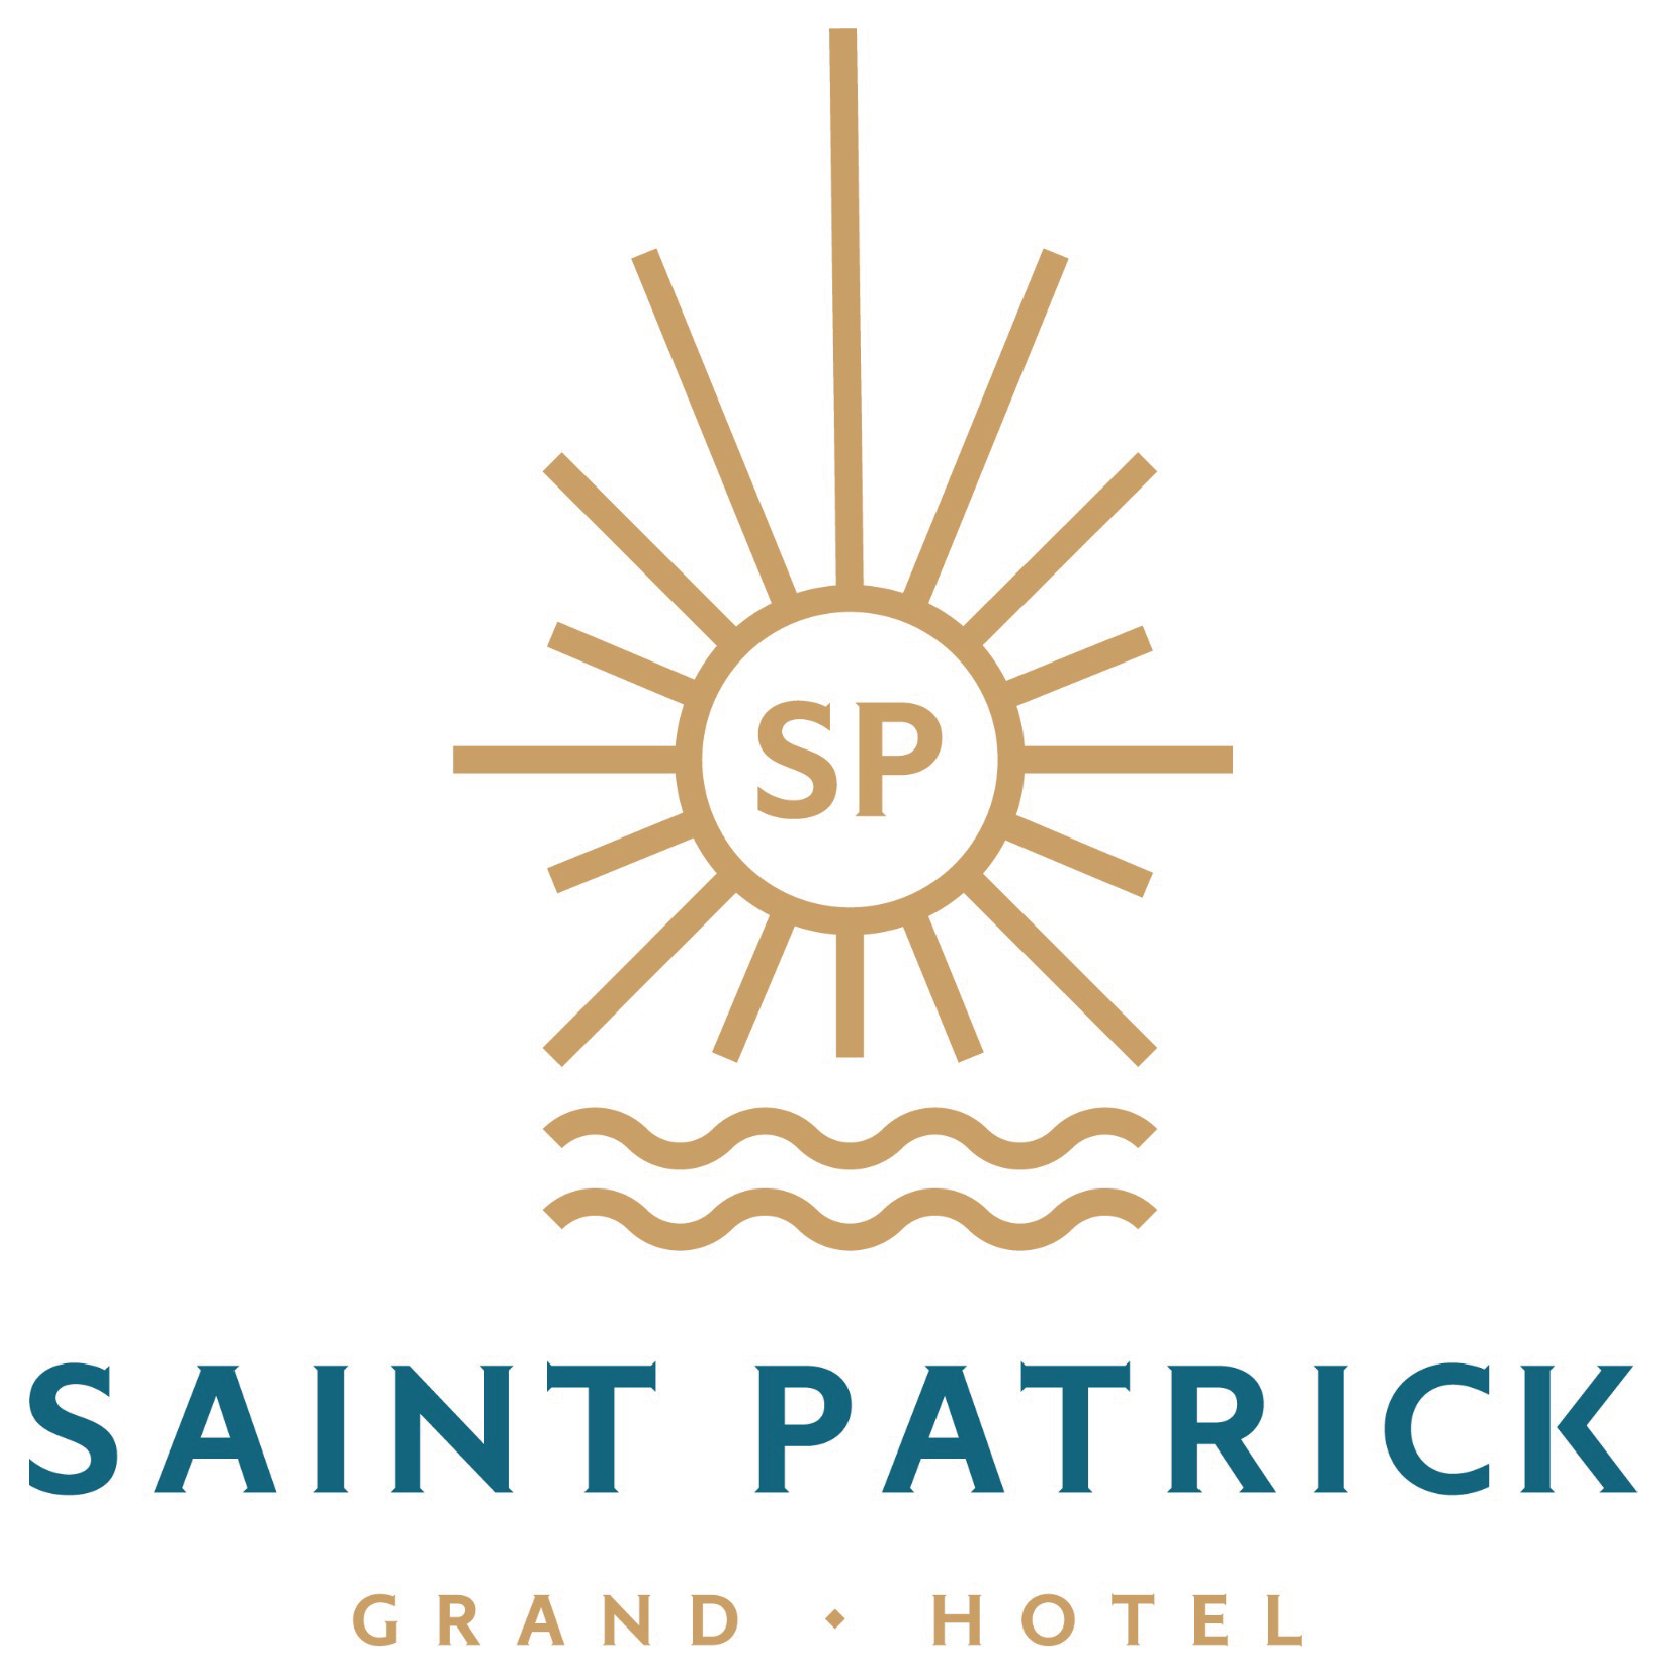 Saint Patrick Grand Hotel